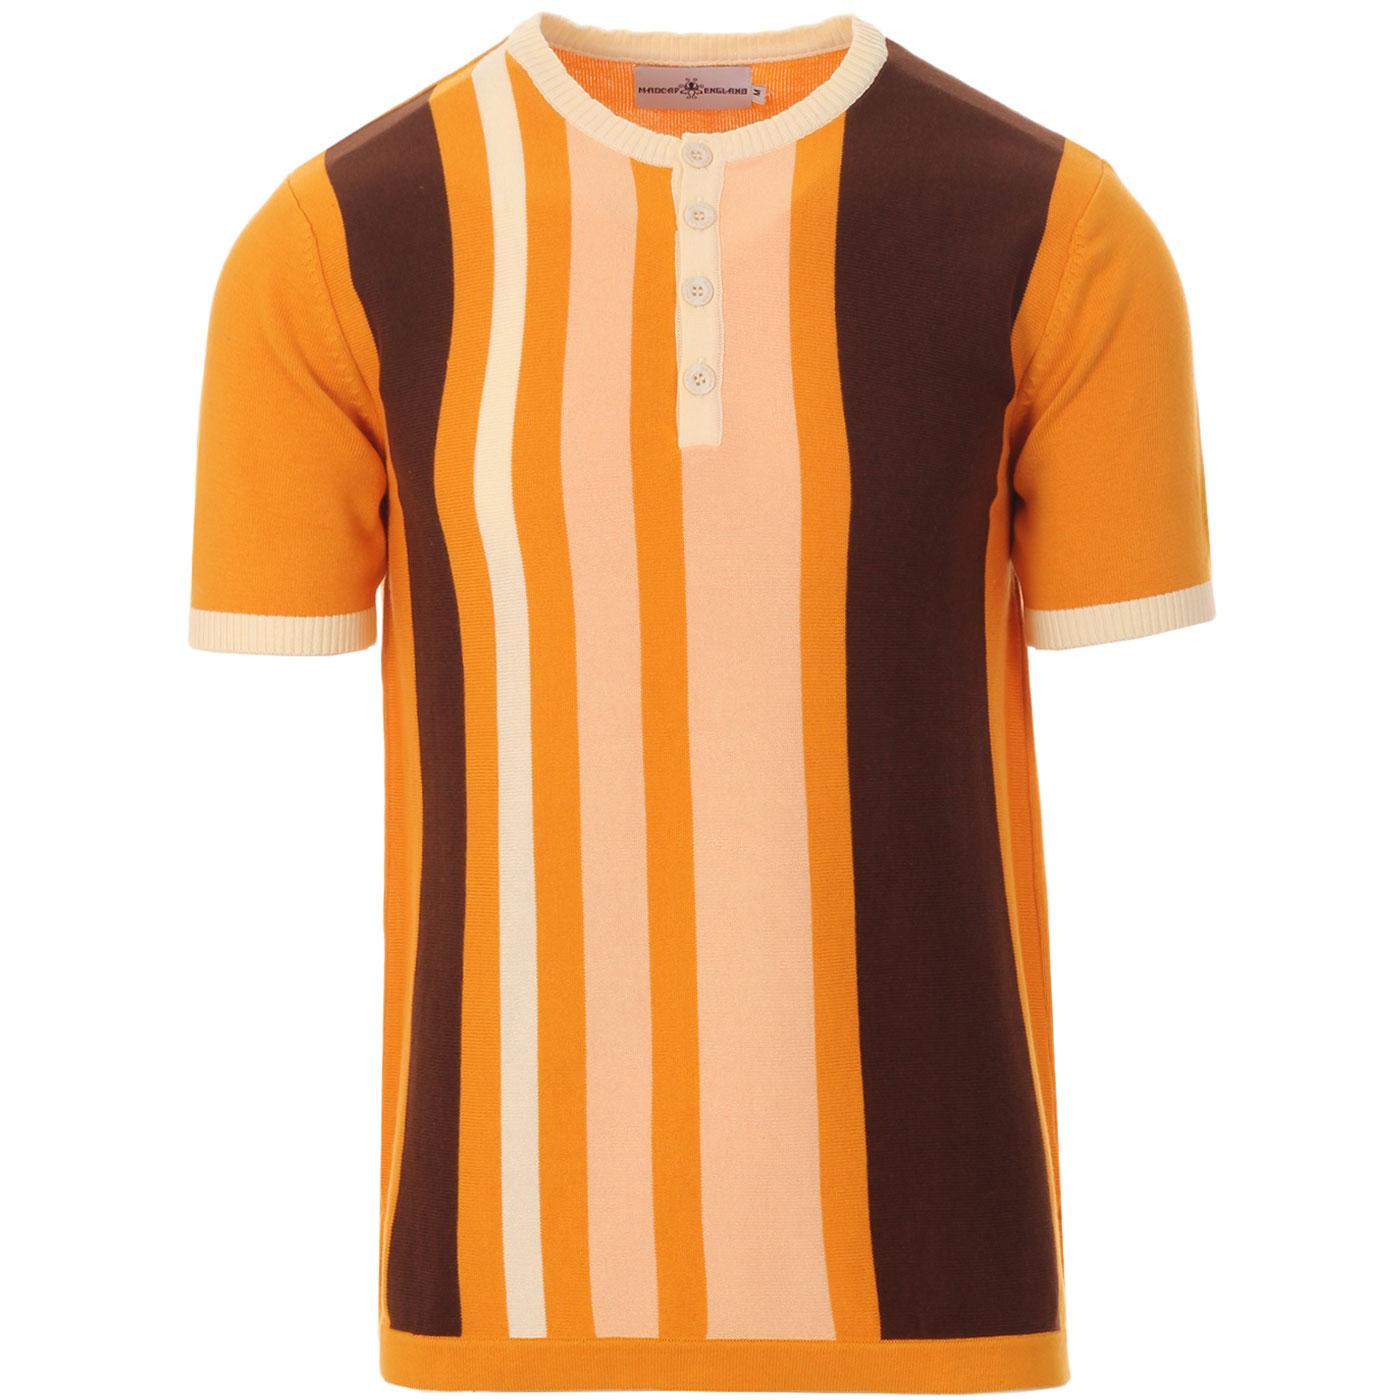 Madcap England Zen 60s Mod Stripe Panel Knitted Polo Shirt in Autumn Blaze